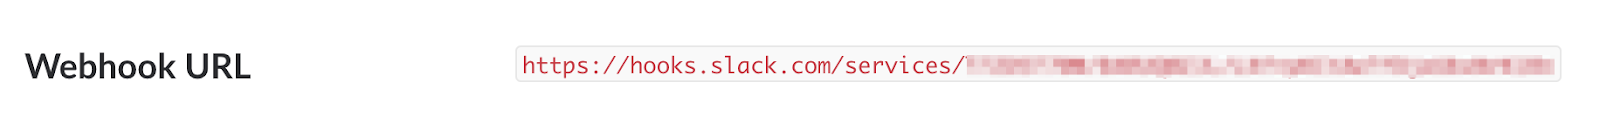 Slack webhook URL.